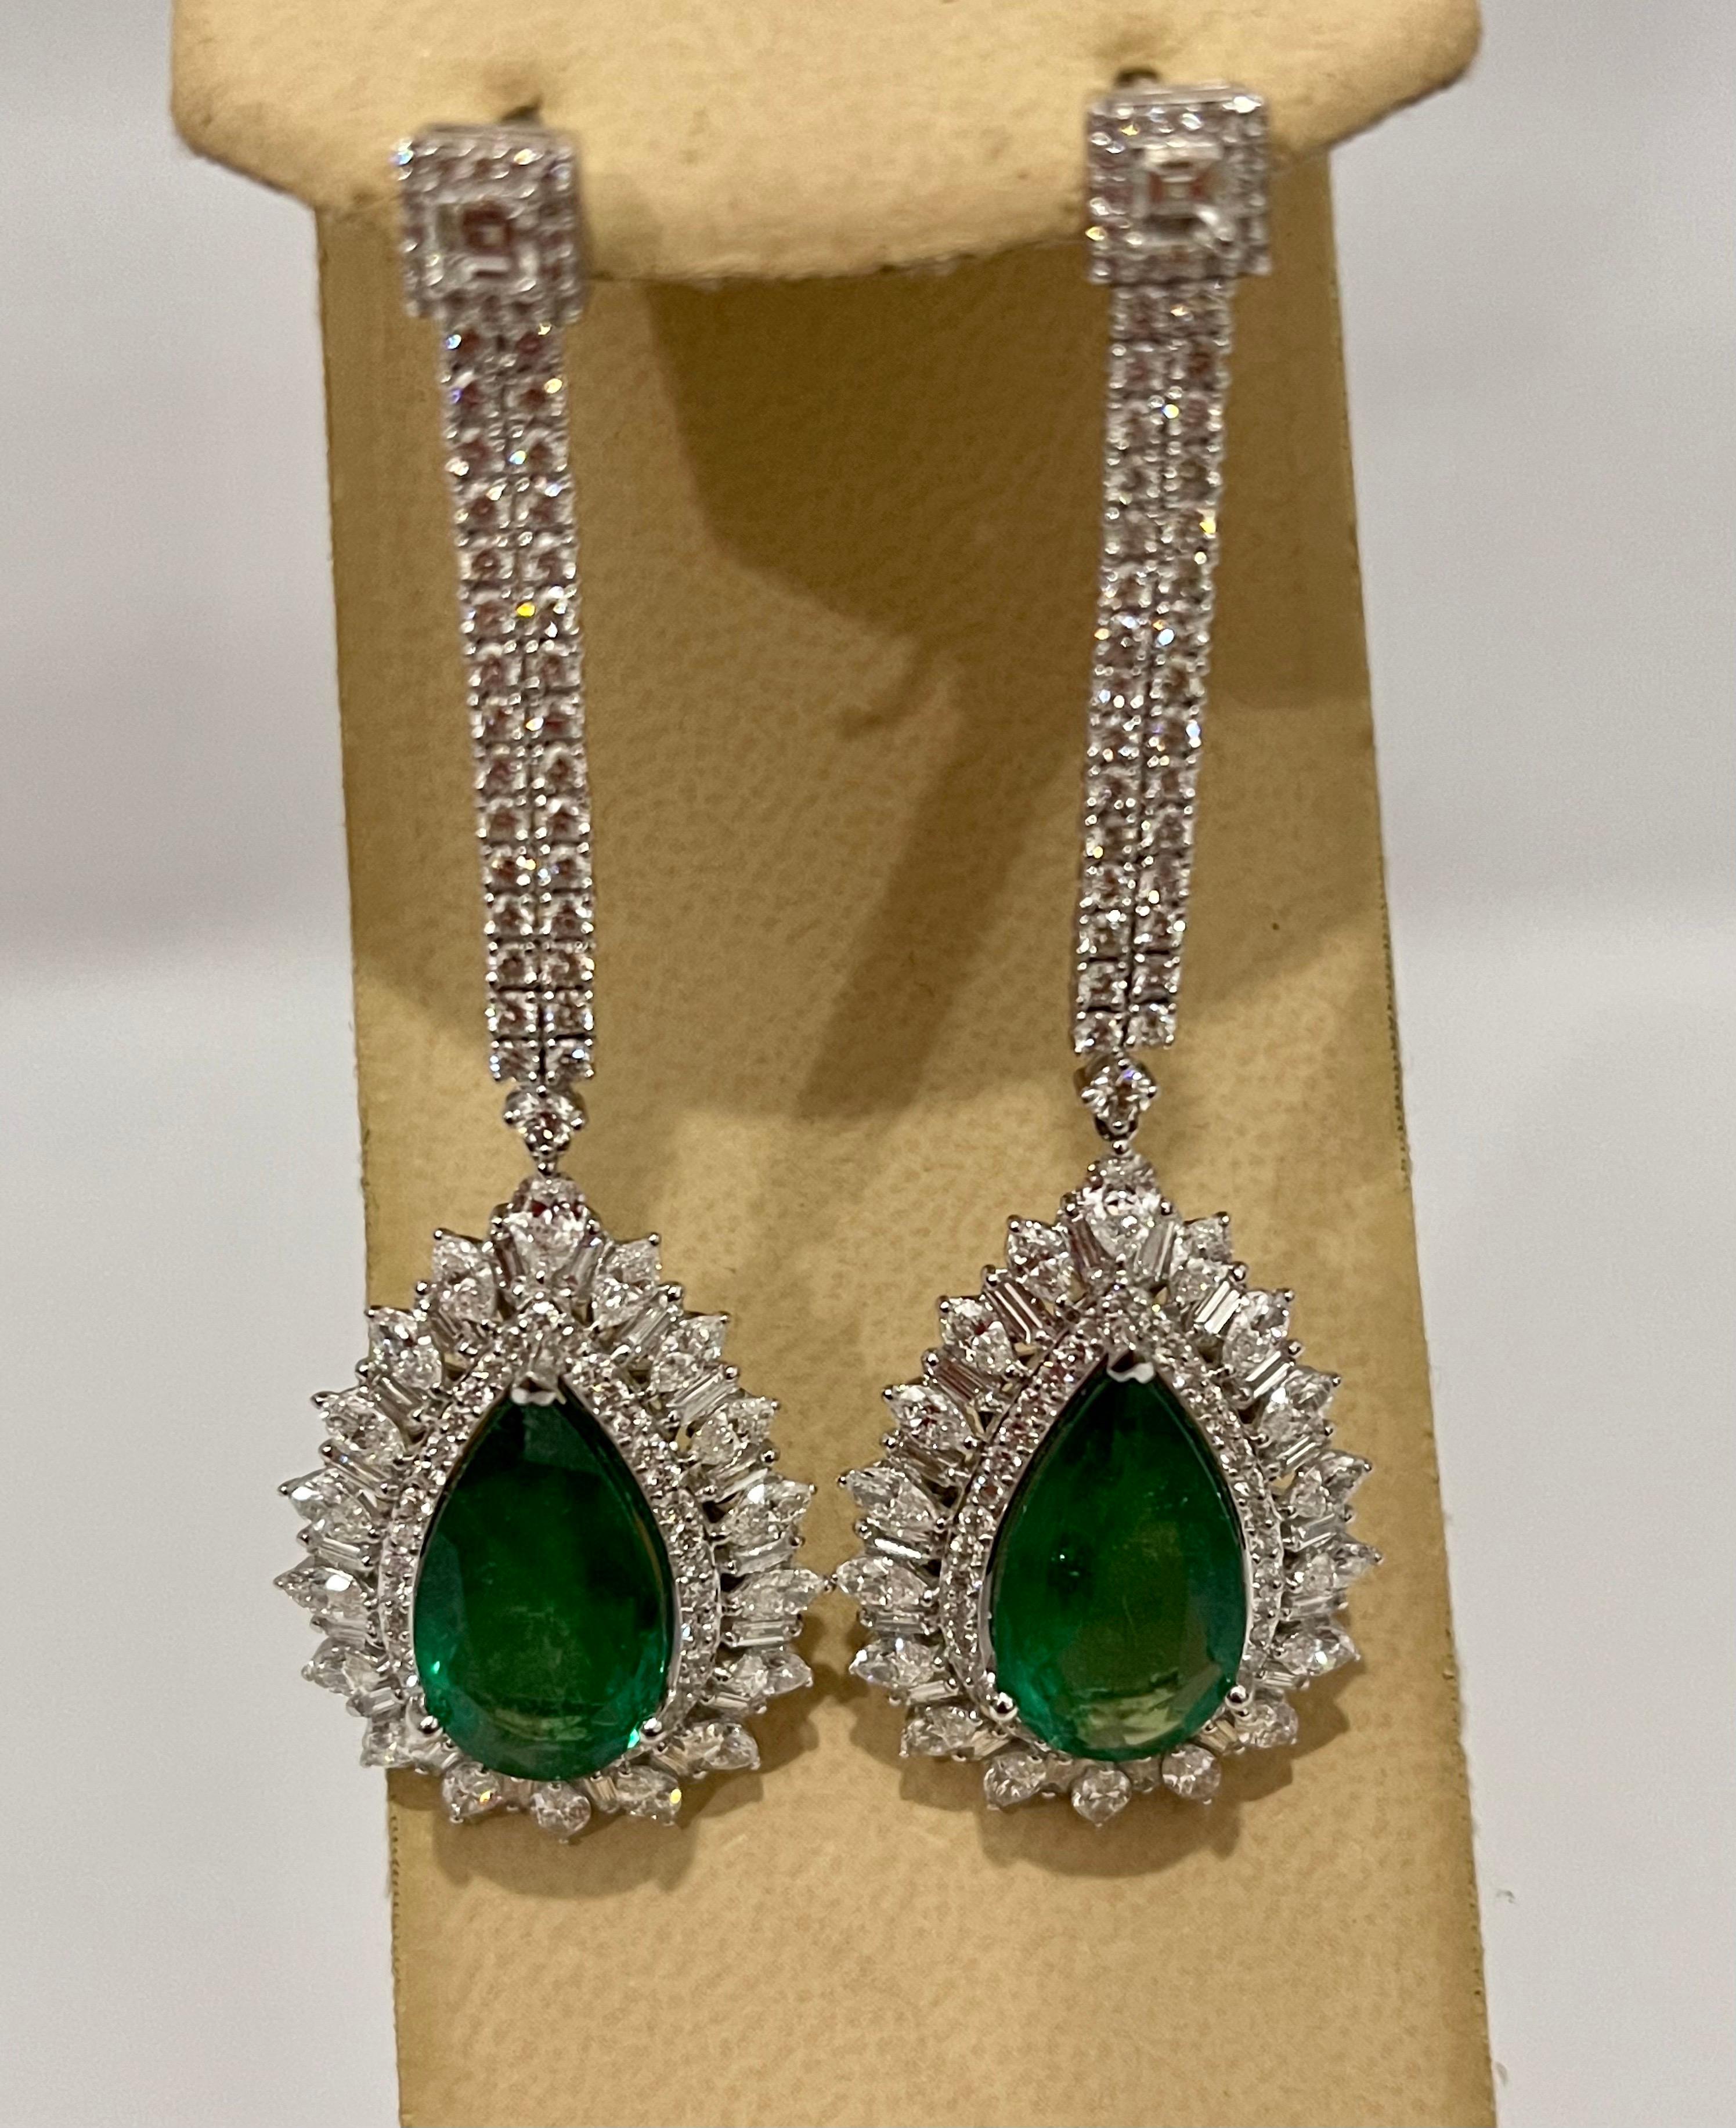 11 Ct Pear Shape Zambian Emerald & 6 Ct Diamonds Drop Earrings 18K White Gold 6